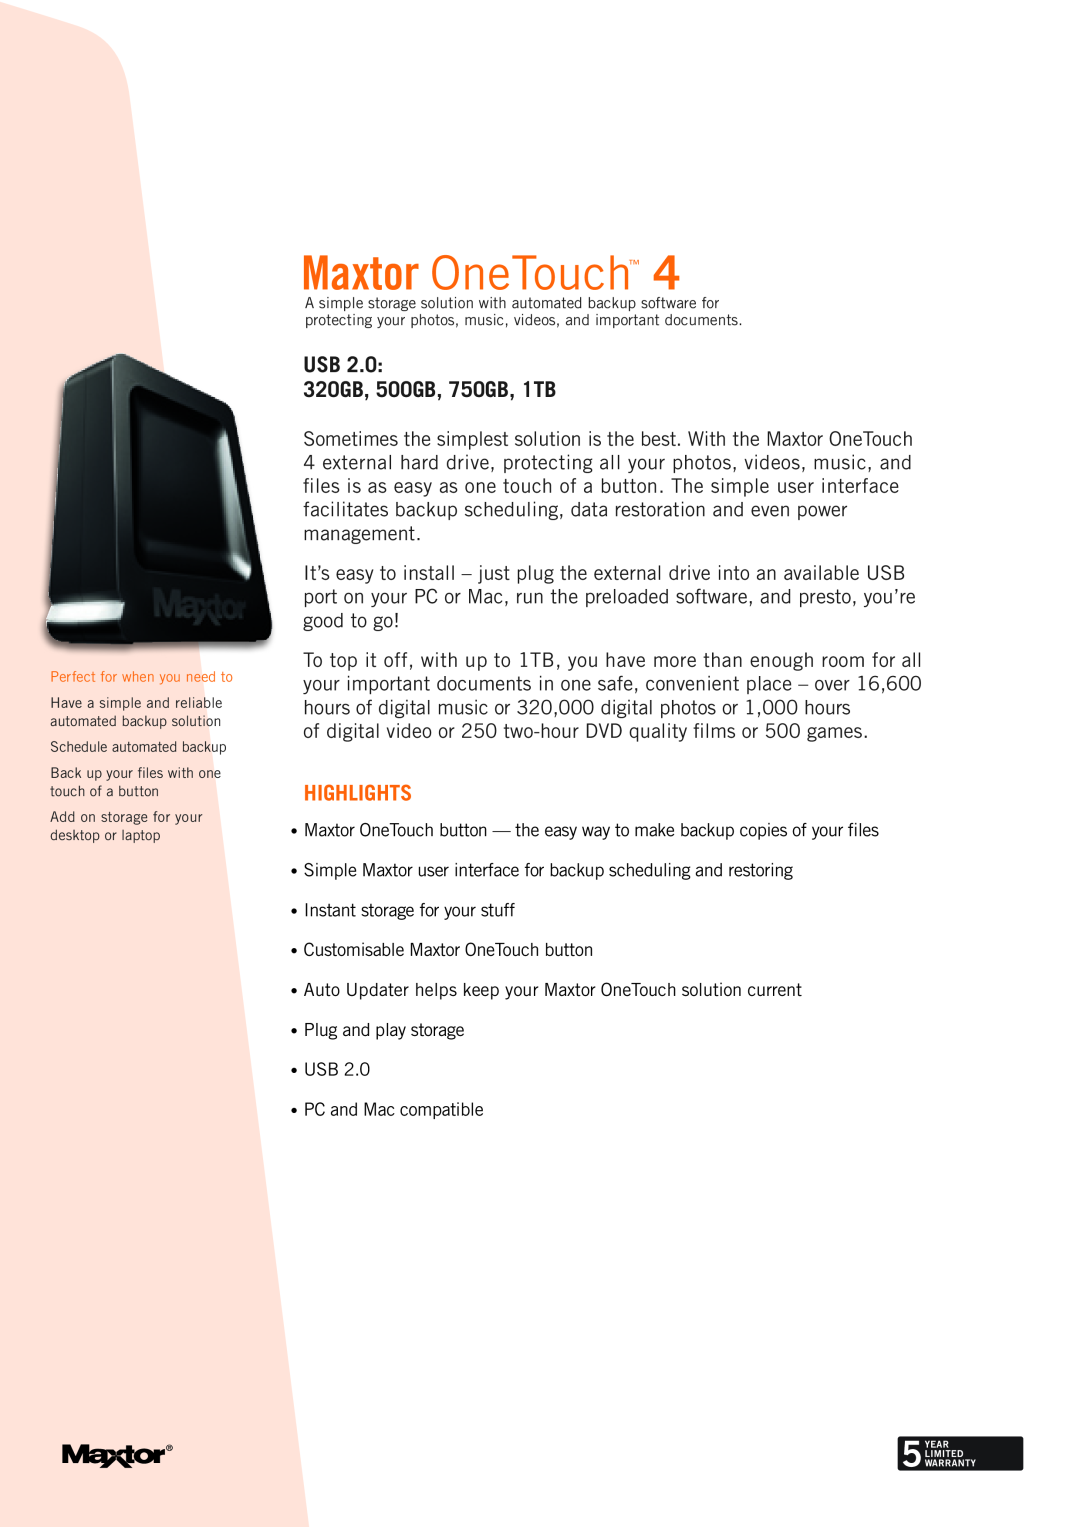 Maxtor STM310005OTA3E1-RK, STM310005OTB3E1-RK manual Maxtor OneTouch, USB 320GB, 500GB, 750GB, 1TB, Highlights 